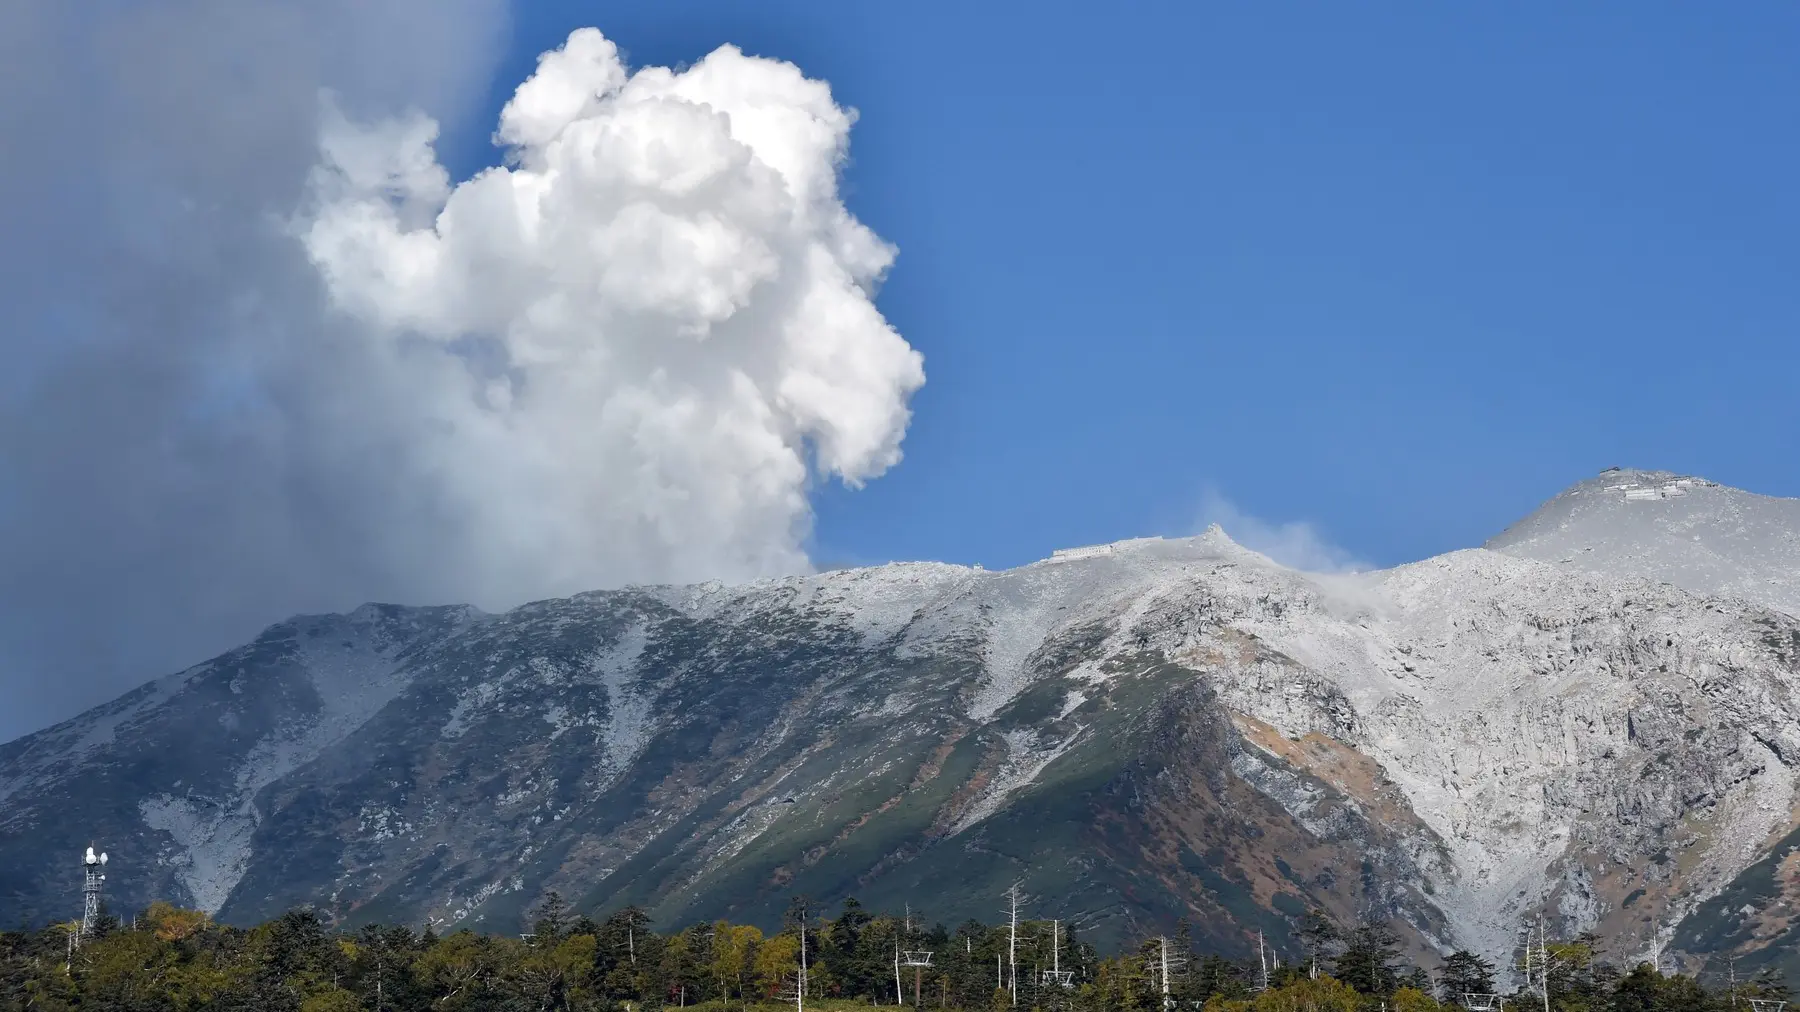 erupcija vulkana ontake, planina ontake - 28 sept 2014 - profimedia-65a2cd0642e5d.webp